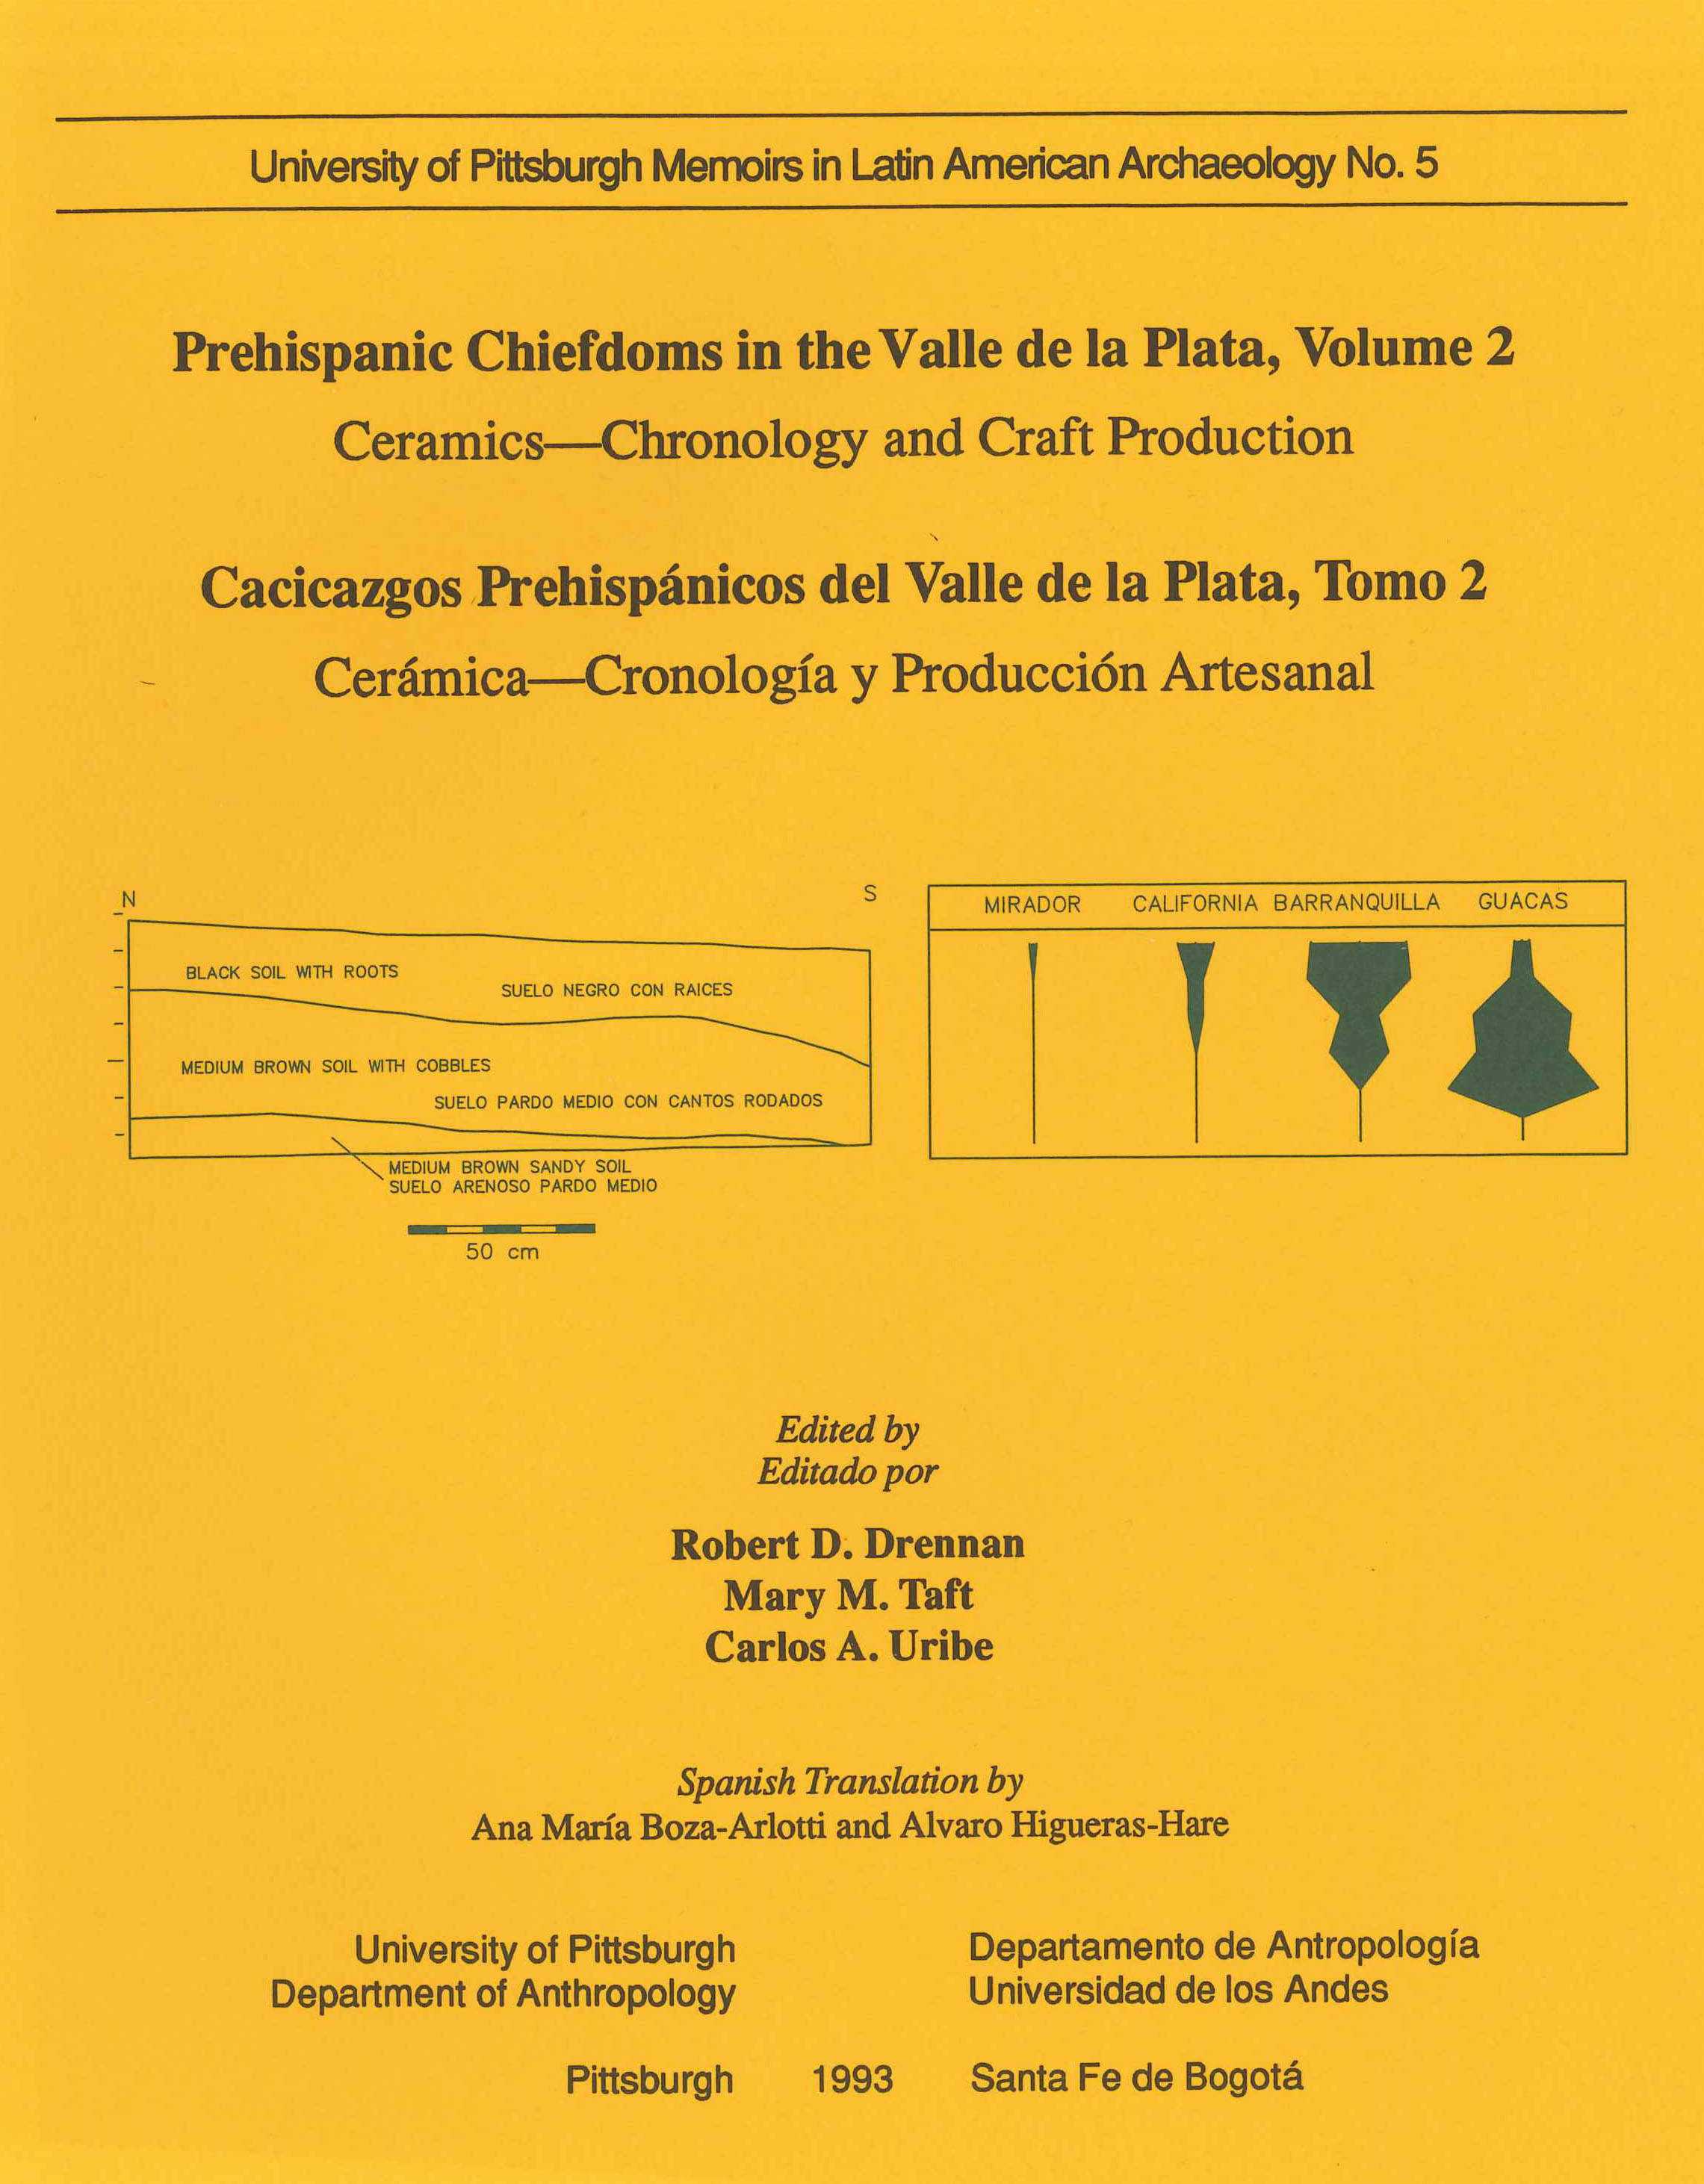 La Plata Chiefdoms, volume 2, cover